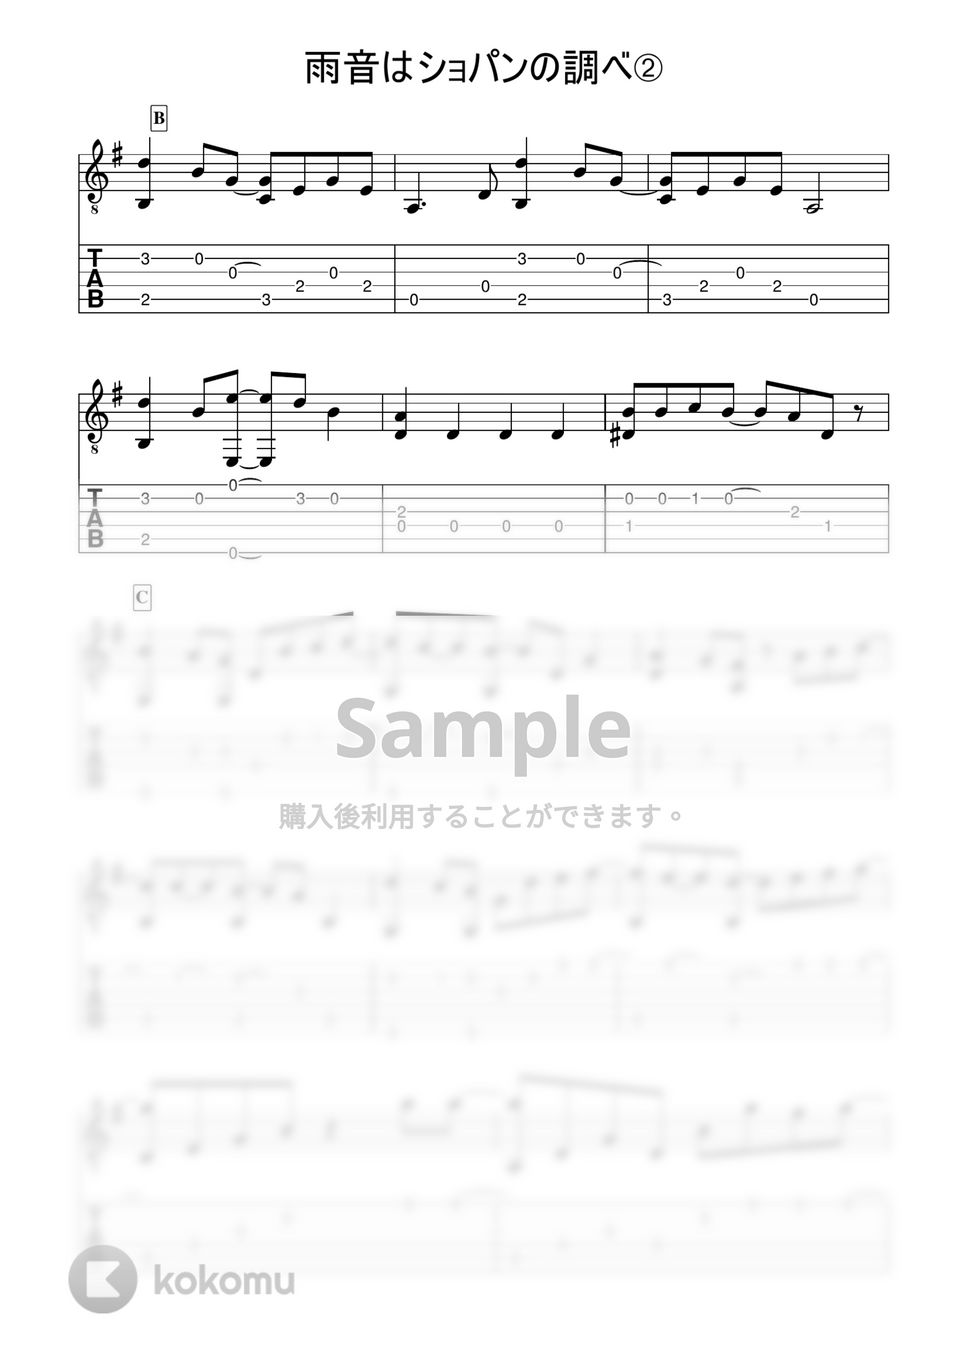 GIOMBINI PIERLUIGI - 雨音はショパンの調べ (かんたんソロギター) by 早乙女浩司